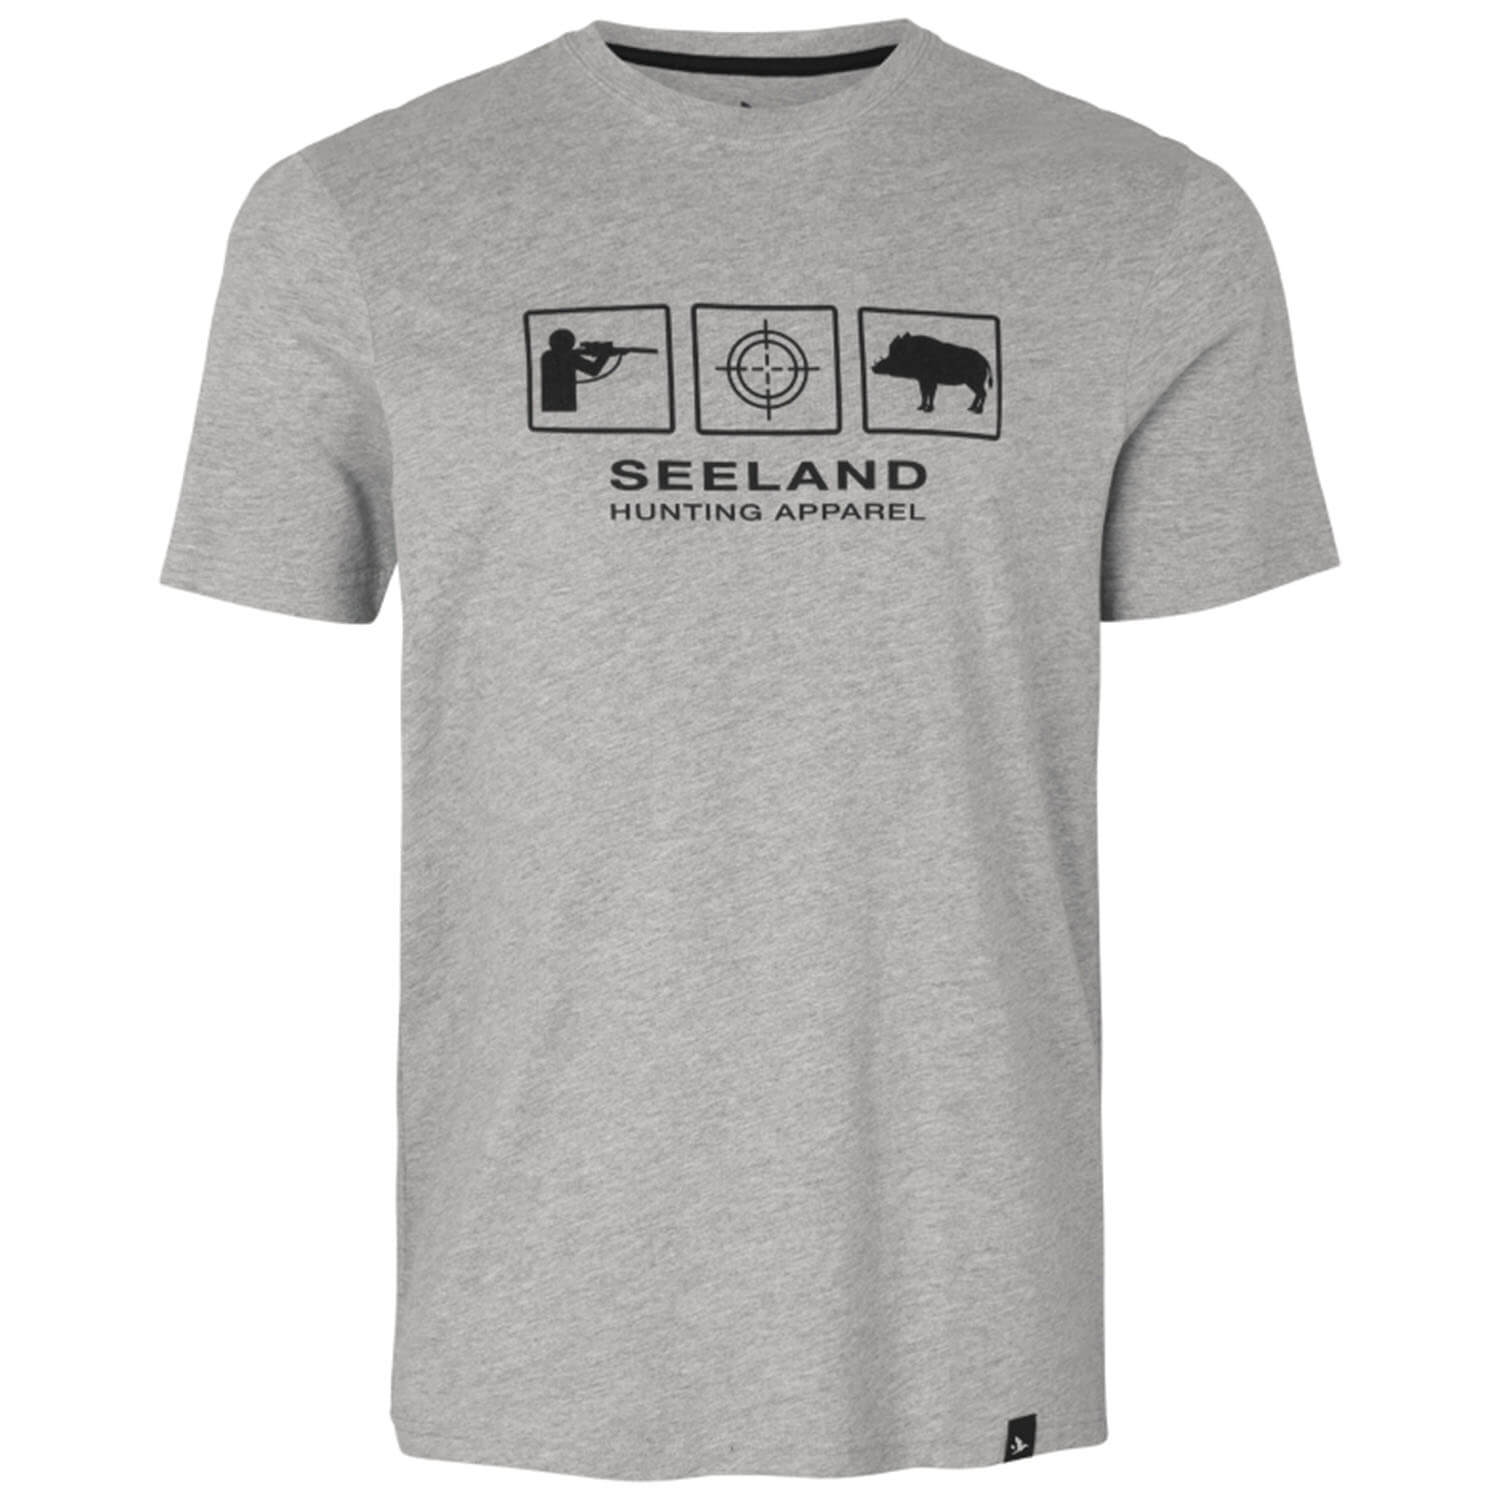  Seeland T-shirt Lanner (Donkergrijs gemêleerd) - Jachtshirts